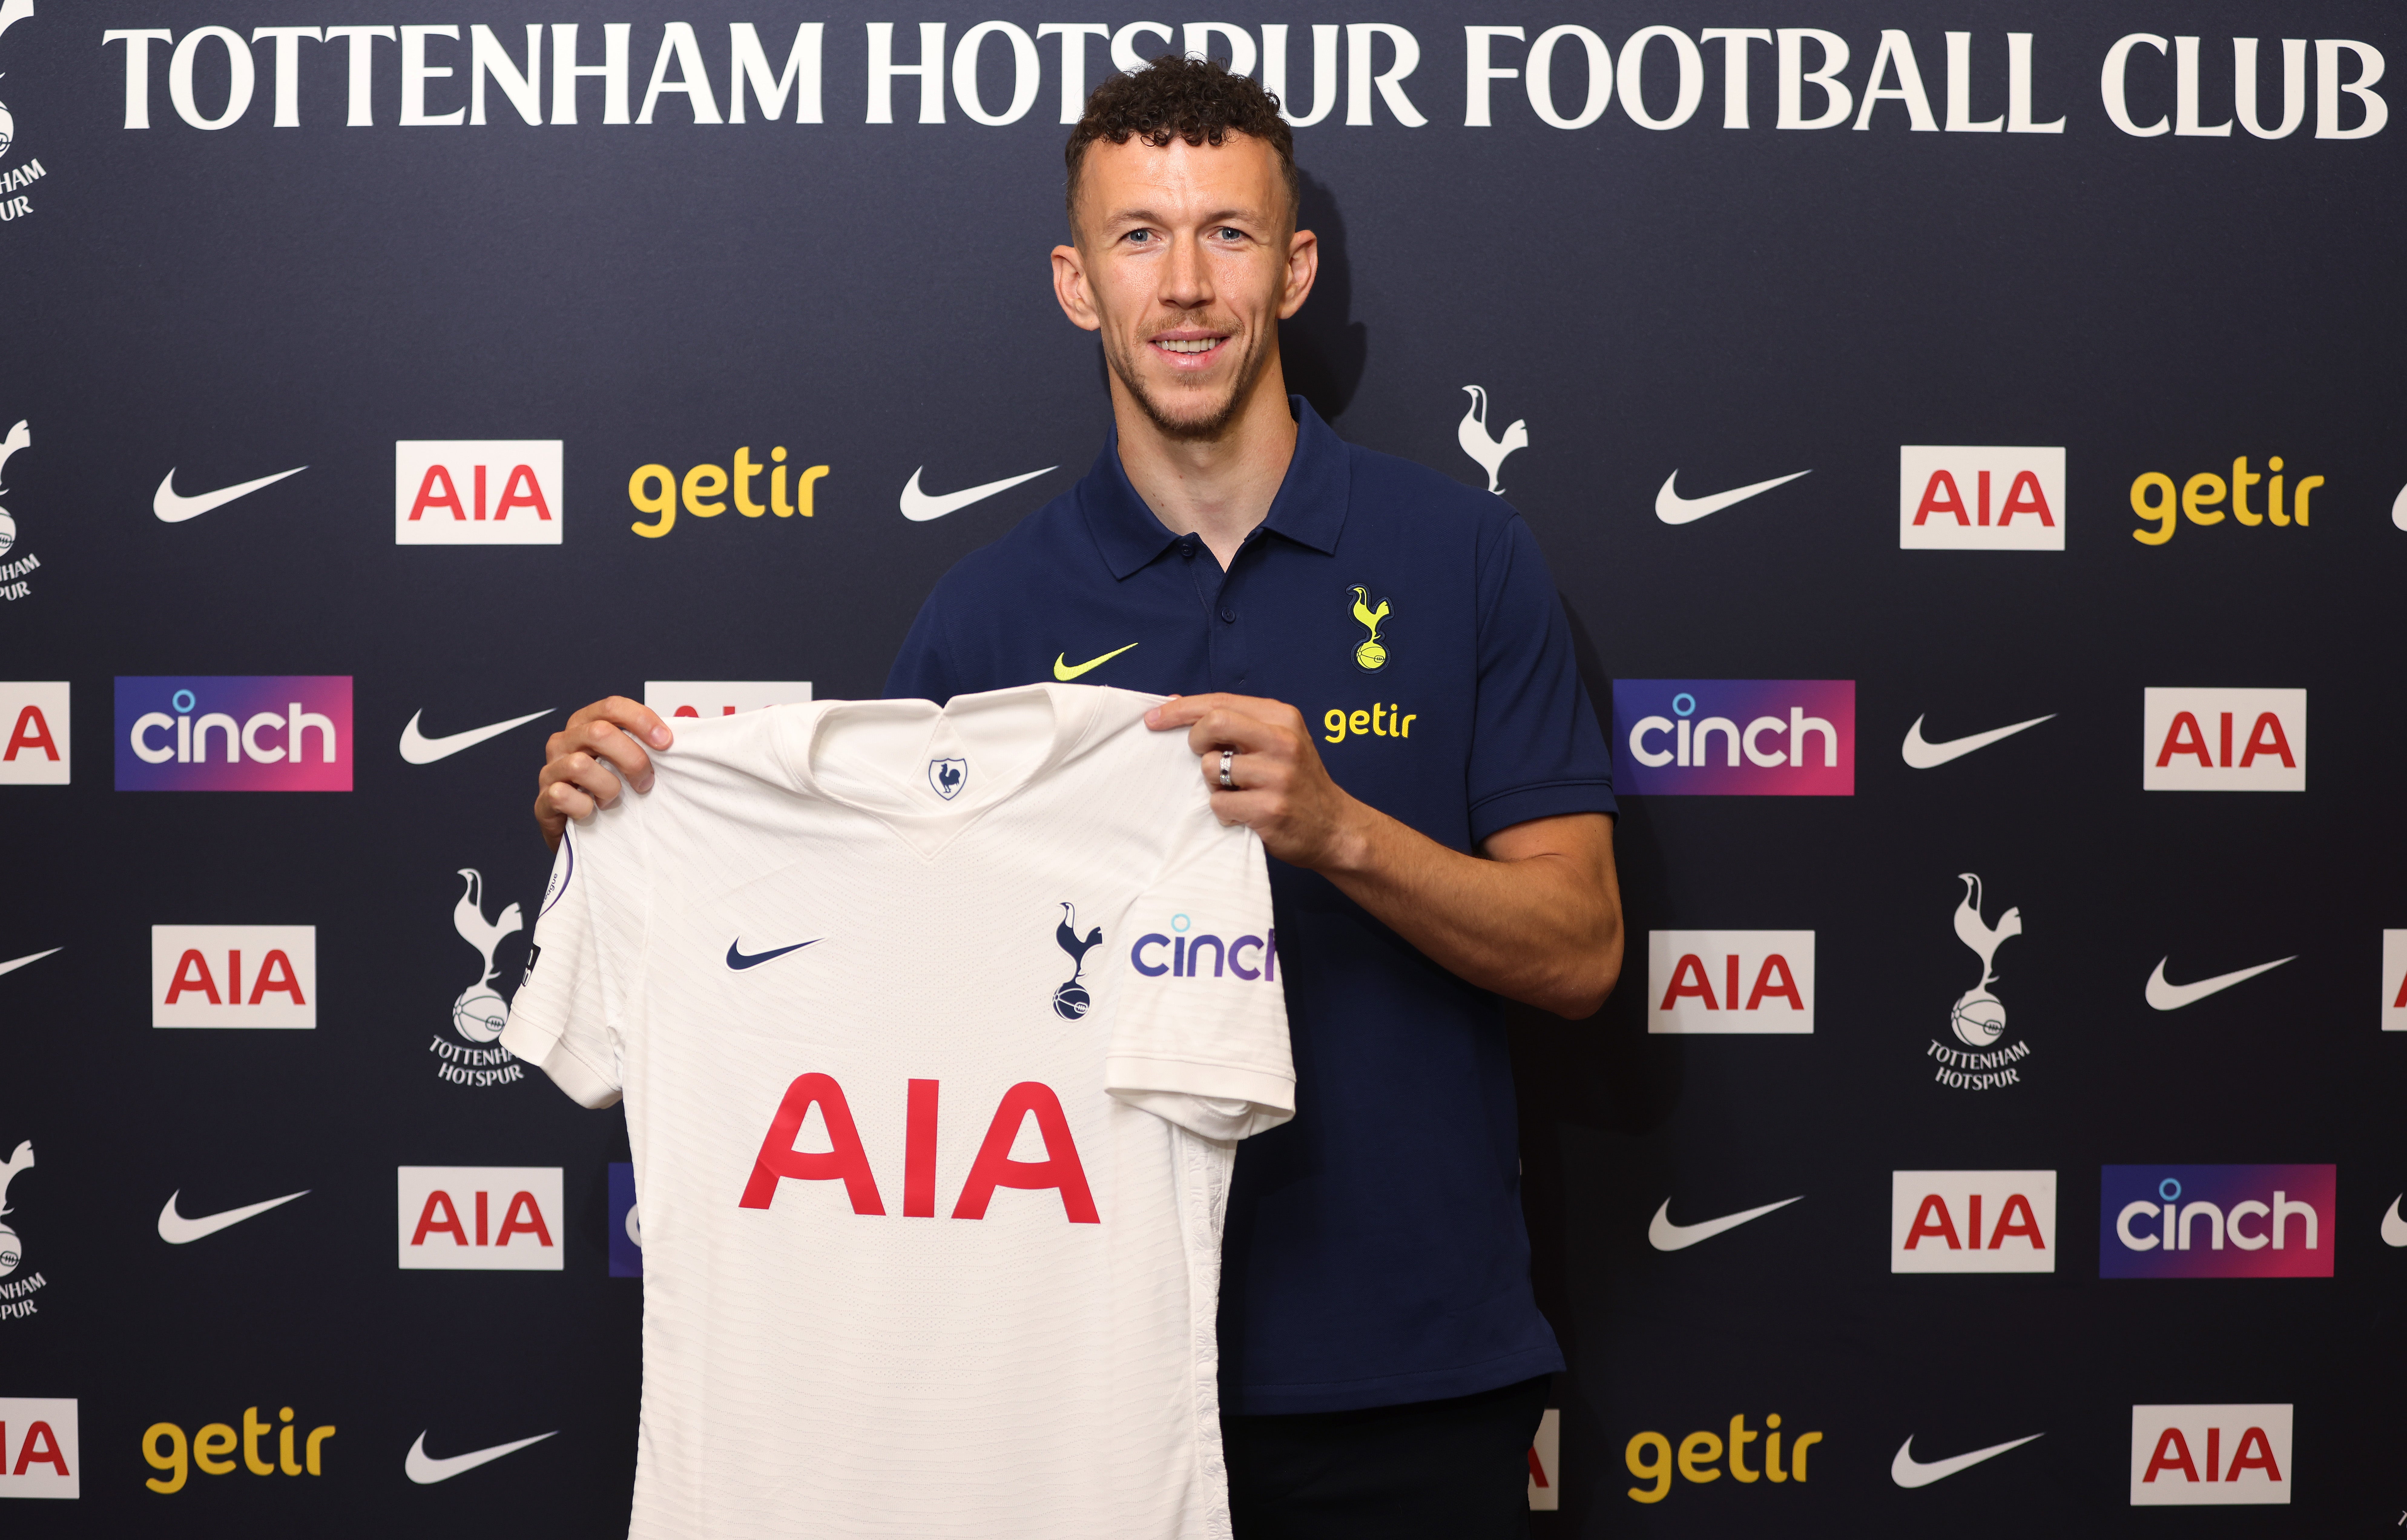 Ivan Perisic poses with the Tottenham shirt